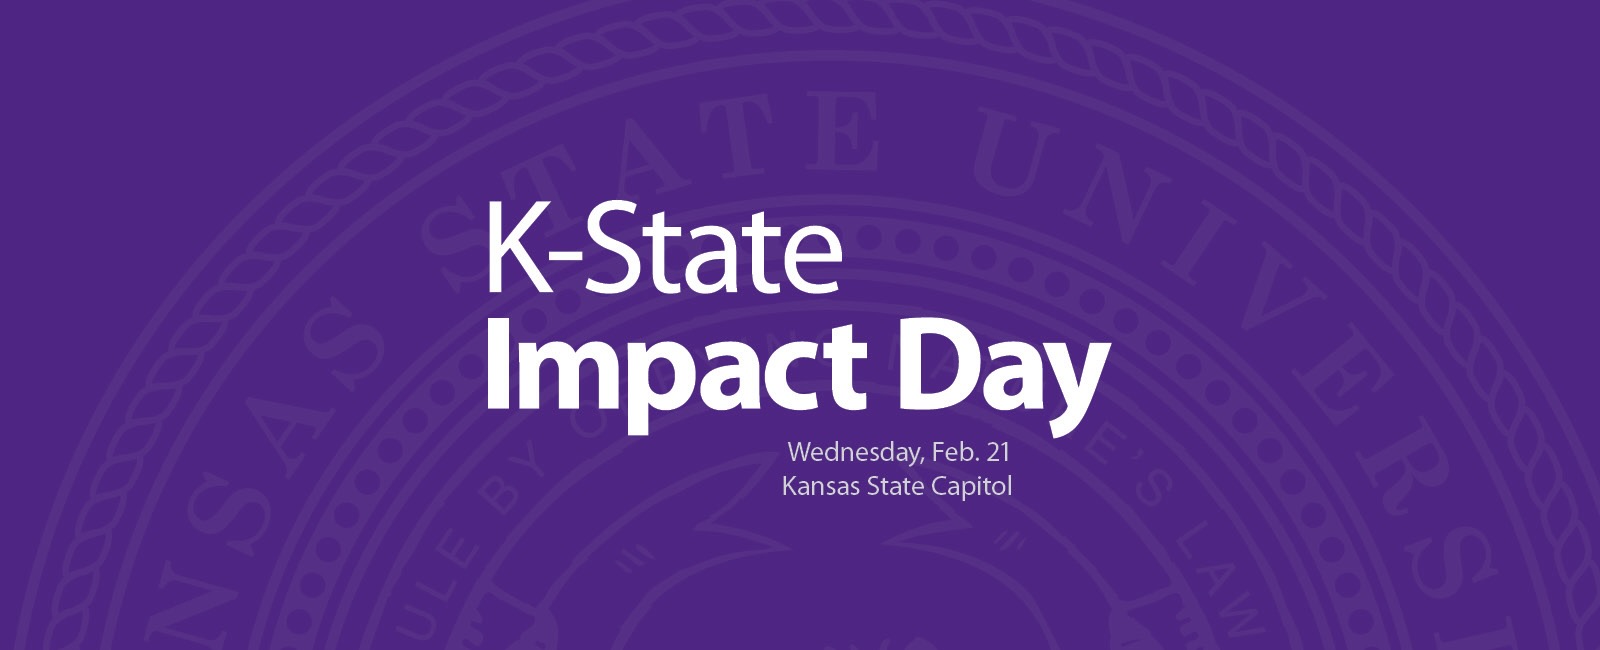 K-State Impact Day